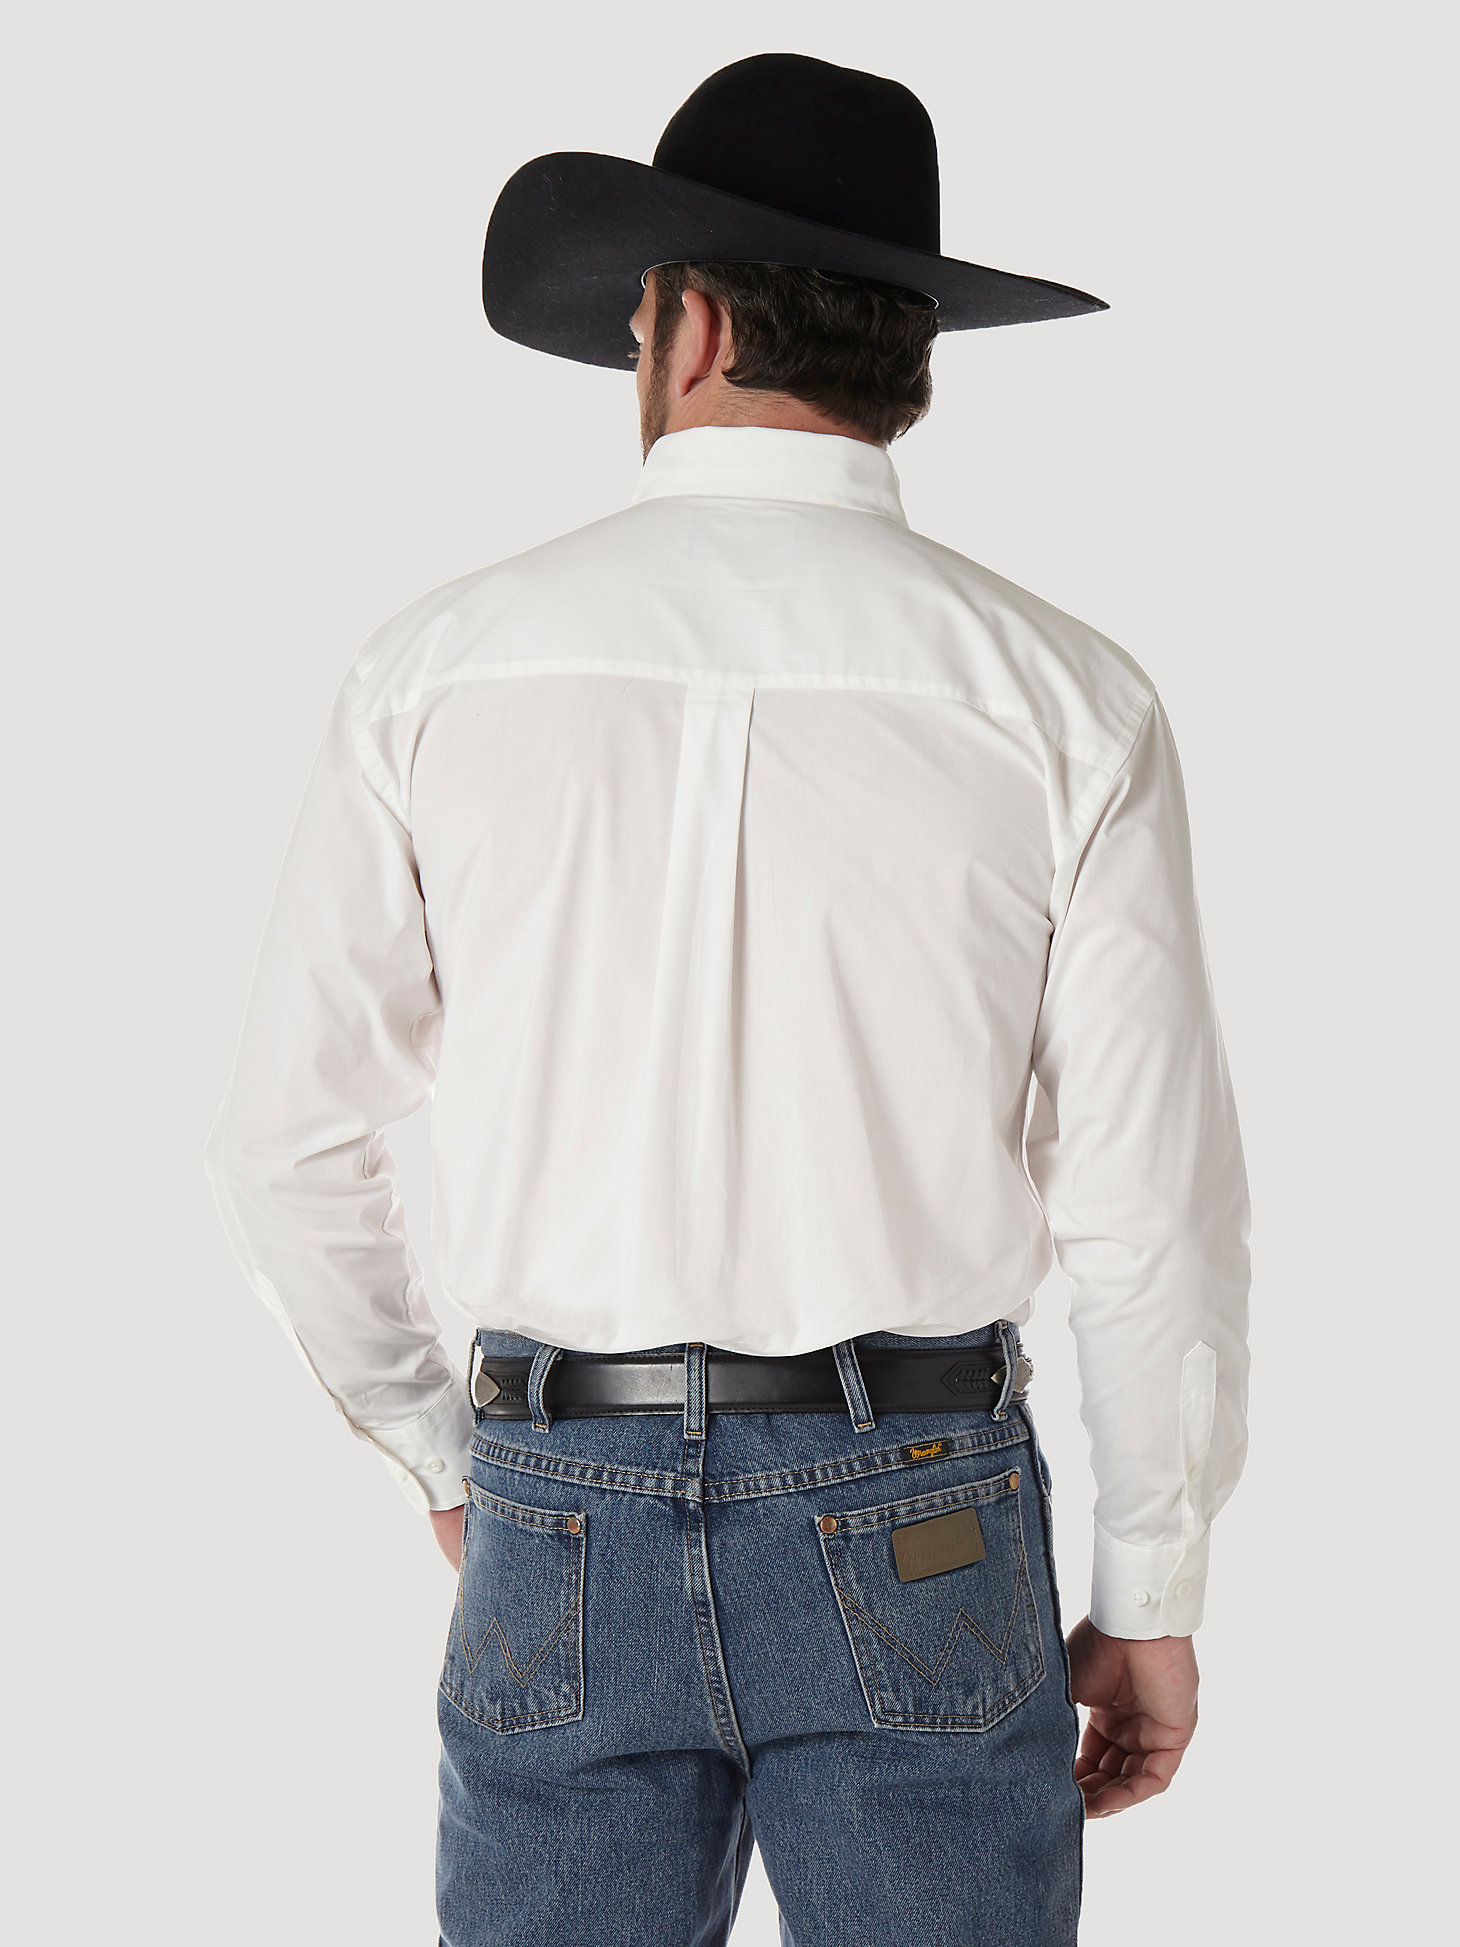 Men's George Strait & Wrangler® National Patriot Button Down Solid Shirt in White alternative view 1